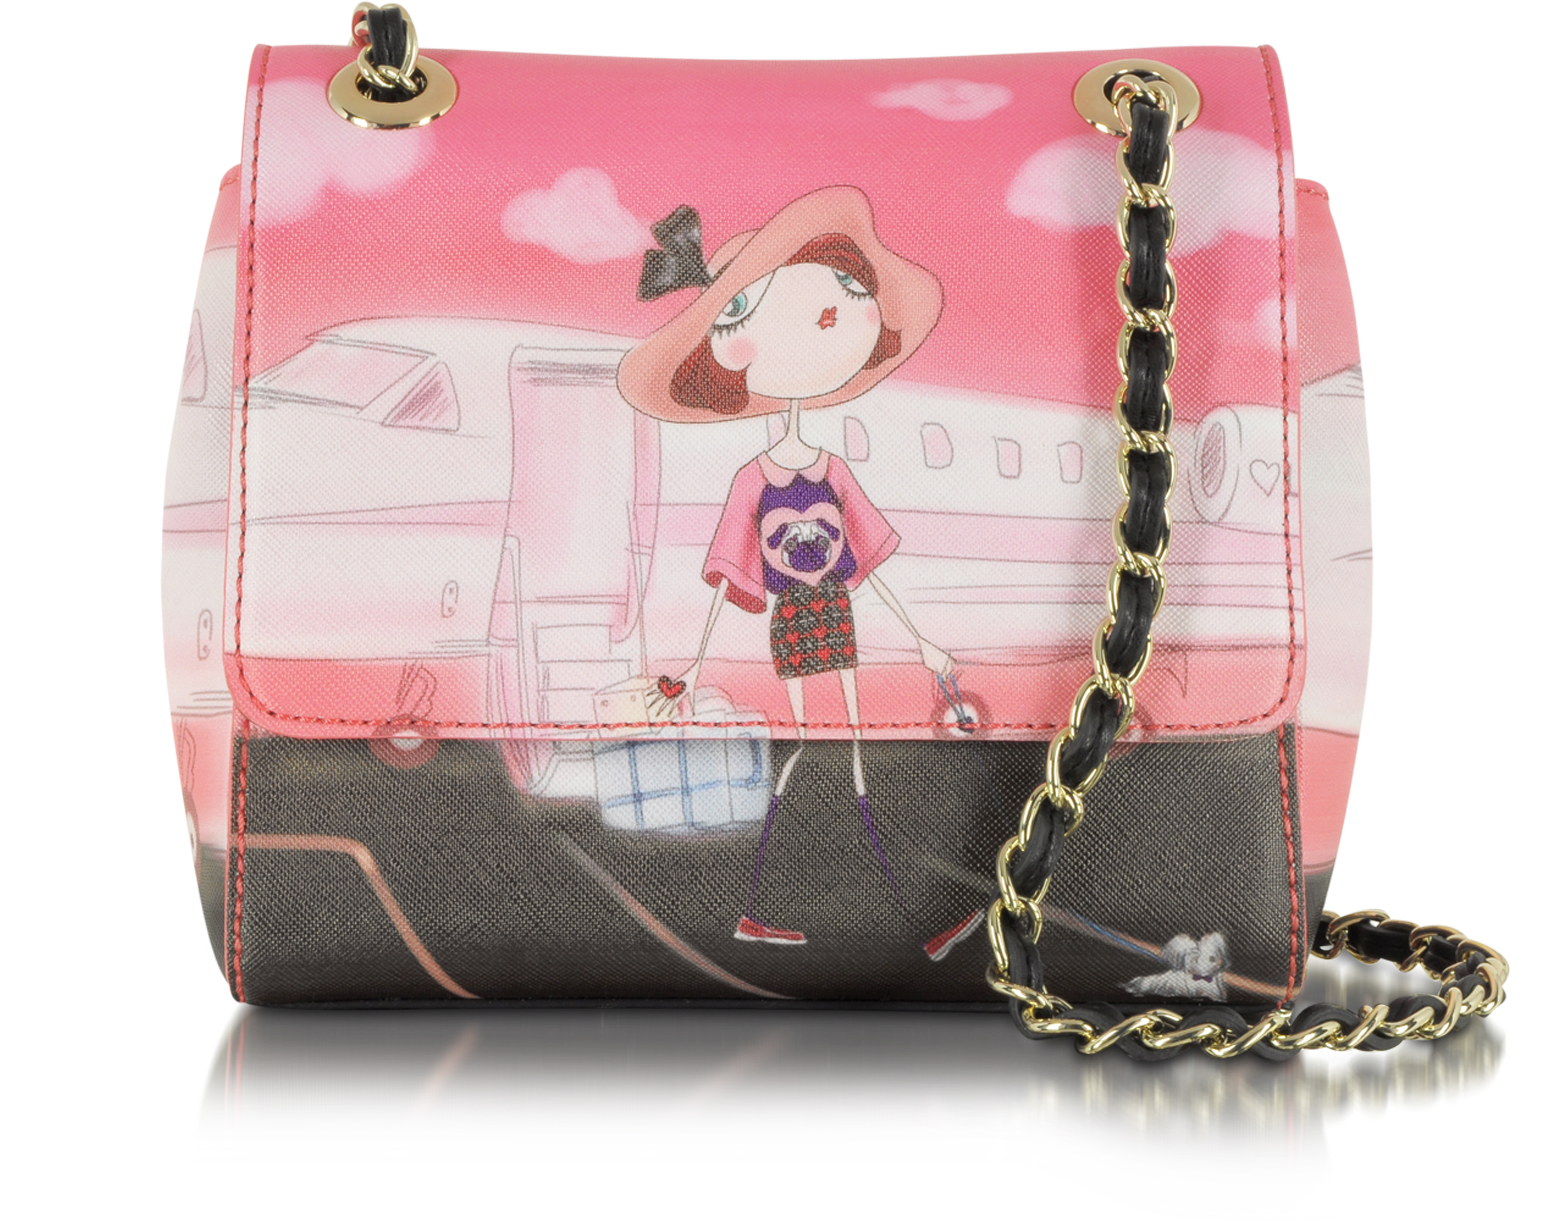 love moschino charming bag